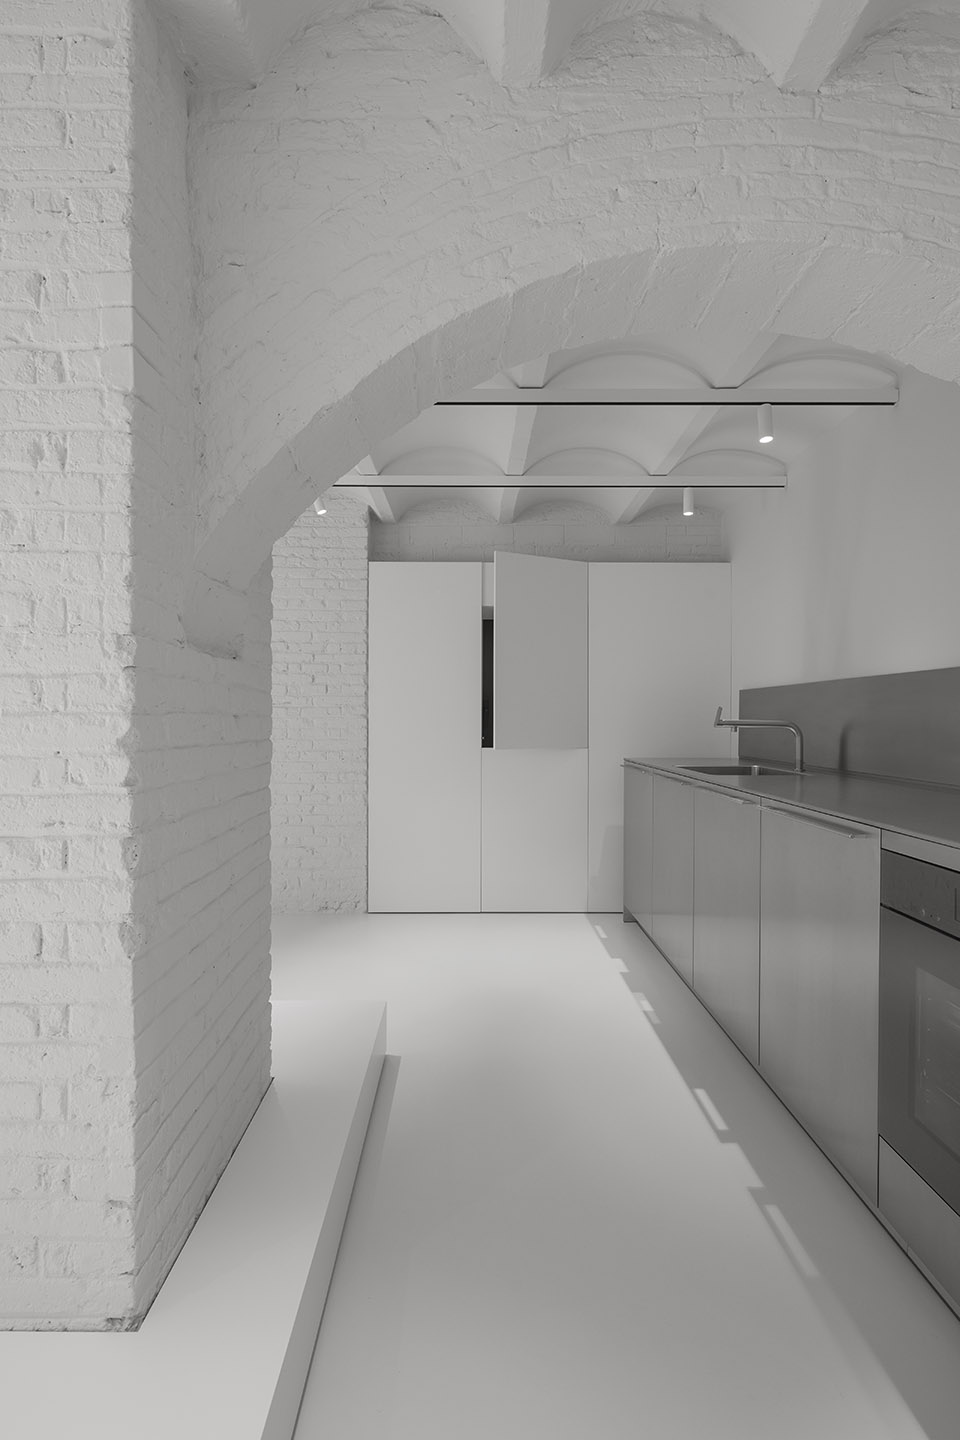 RI HOUSE家居展厅，巴塞罗那/当代艺术画廊的空间形式结合家庭空间元素-34